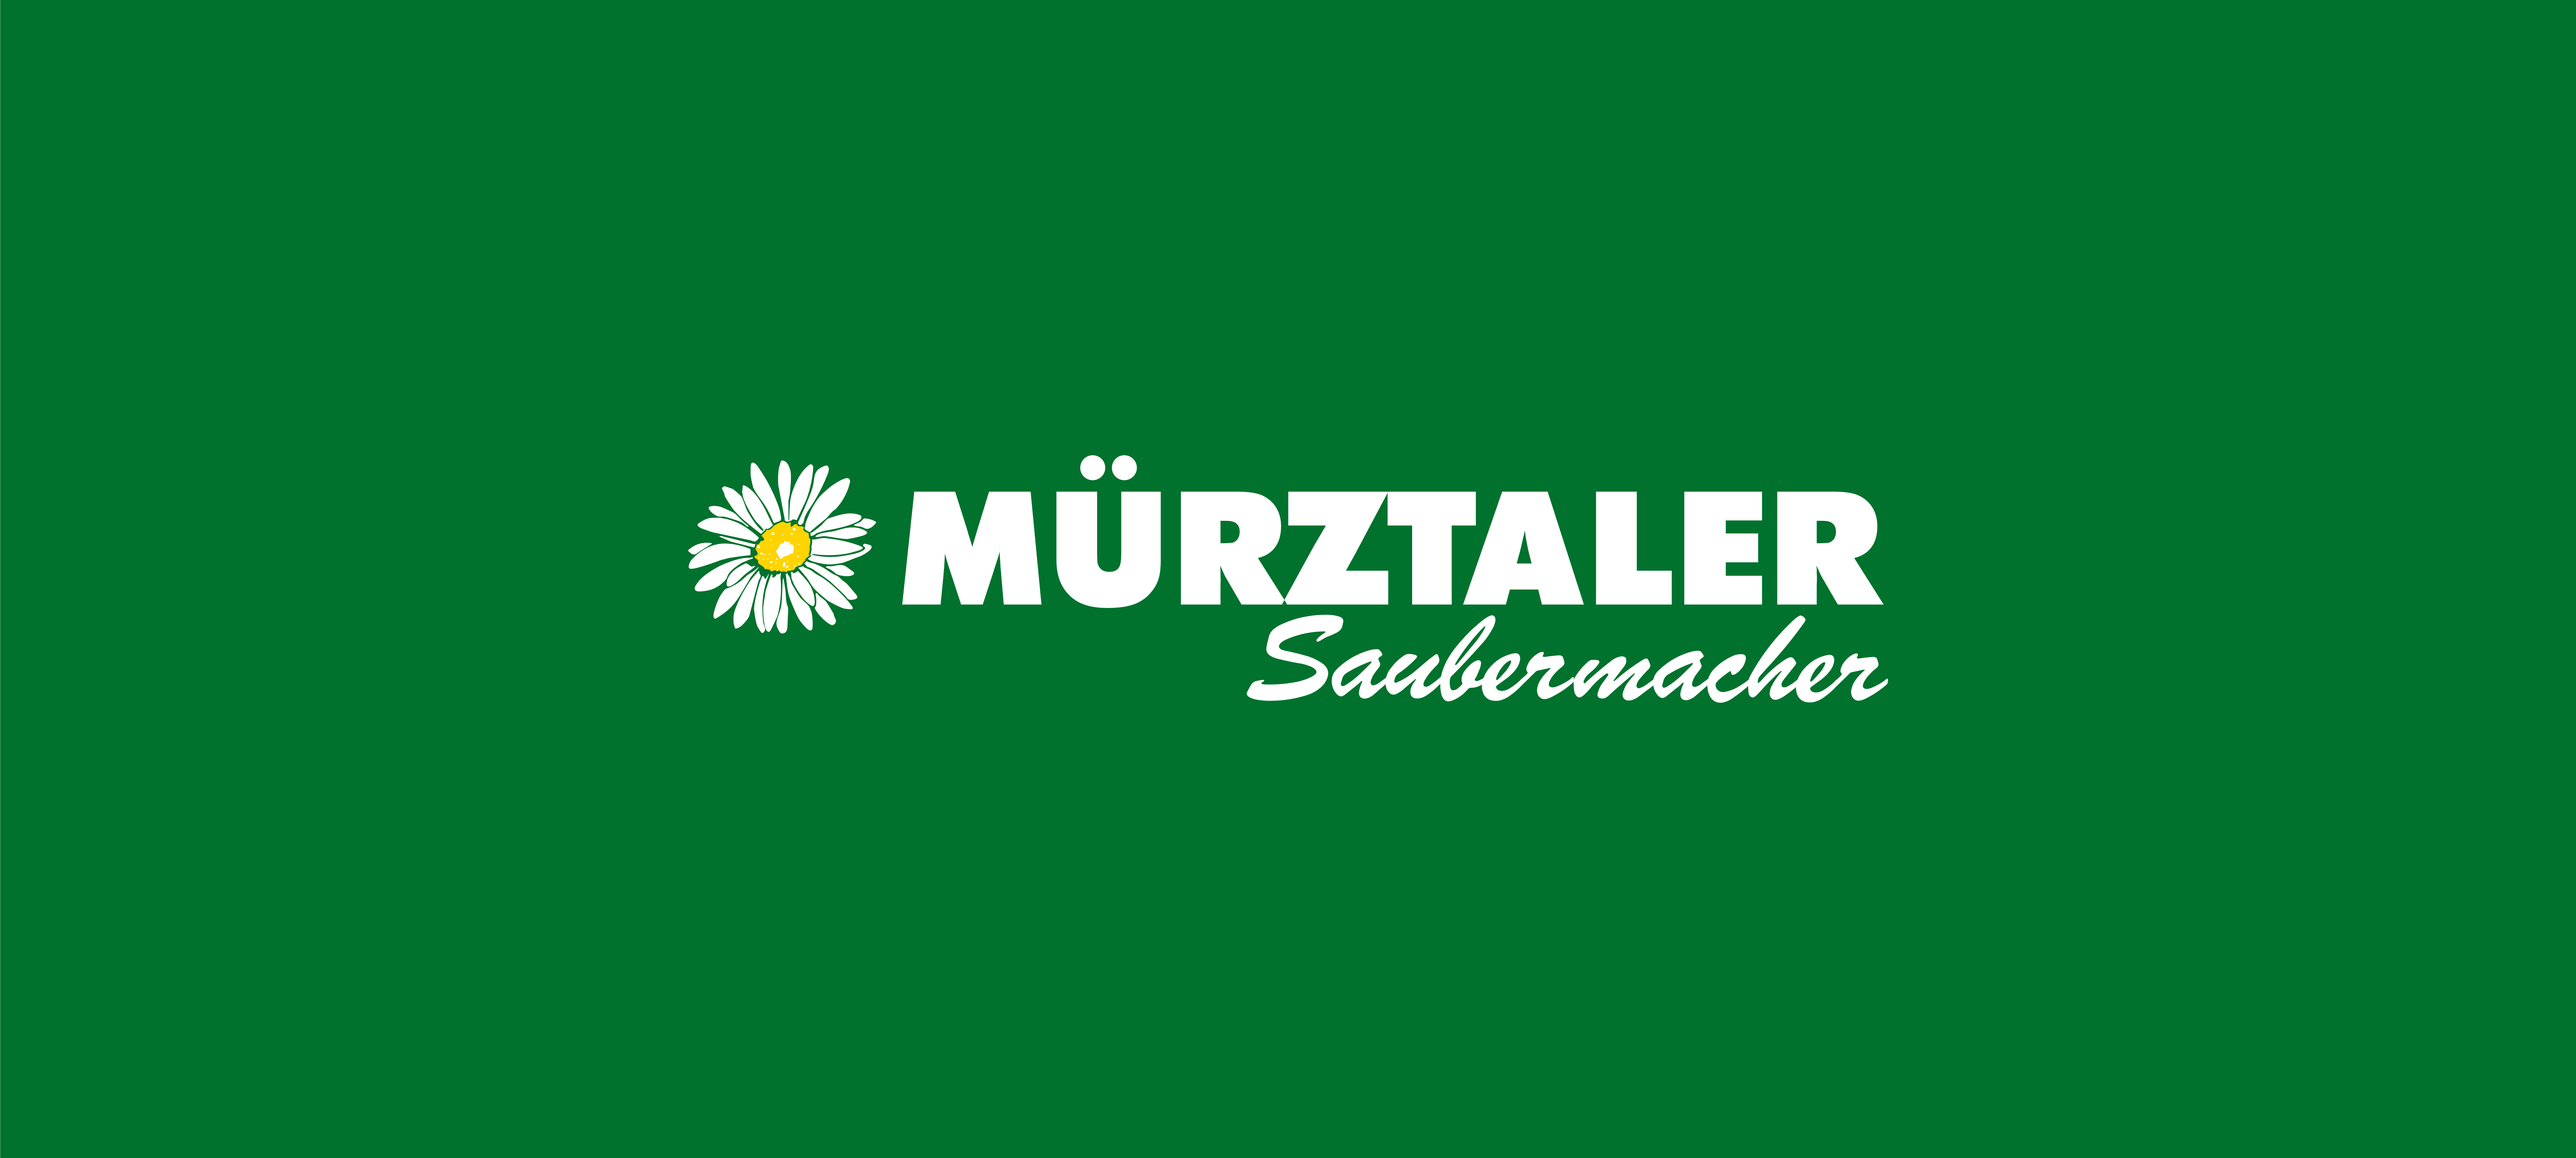 Mürztaler Saubermacher